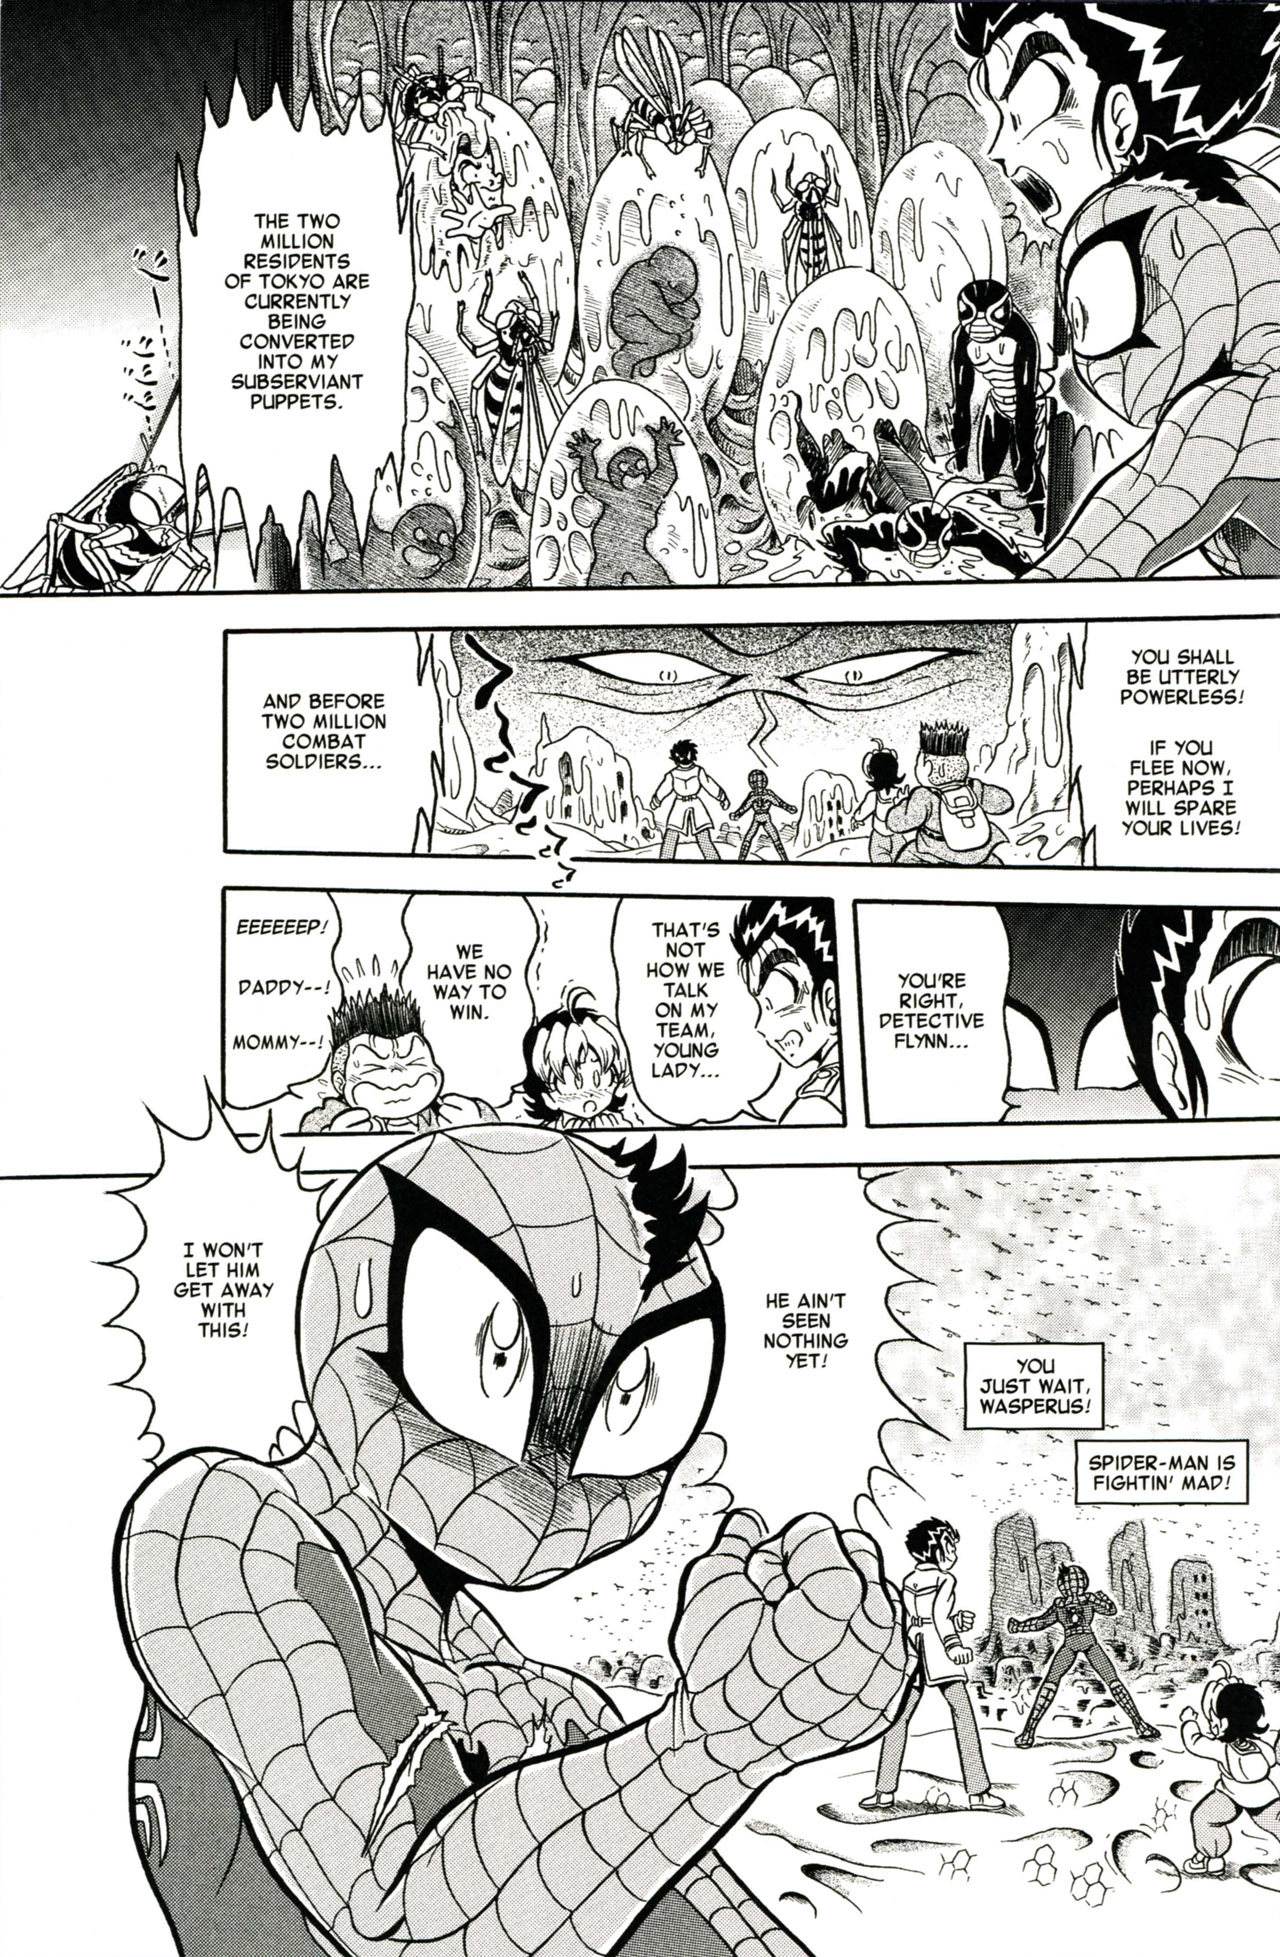 Read online Spider-Man J comic -  Issue # TPB 1 - 20